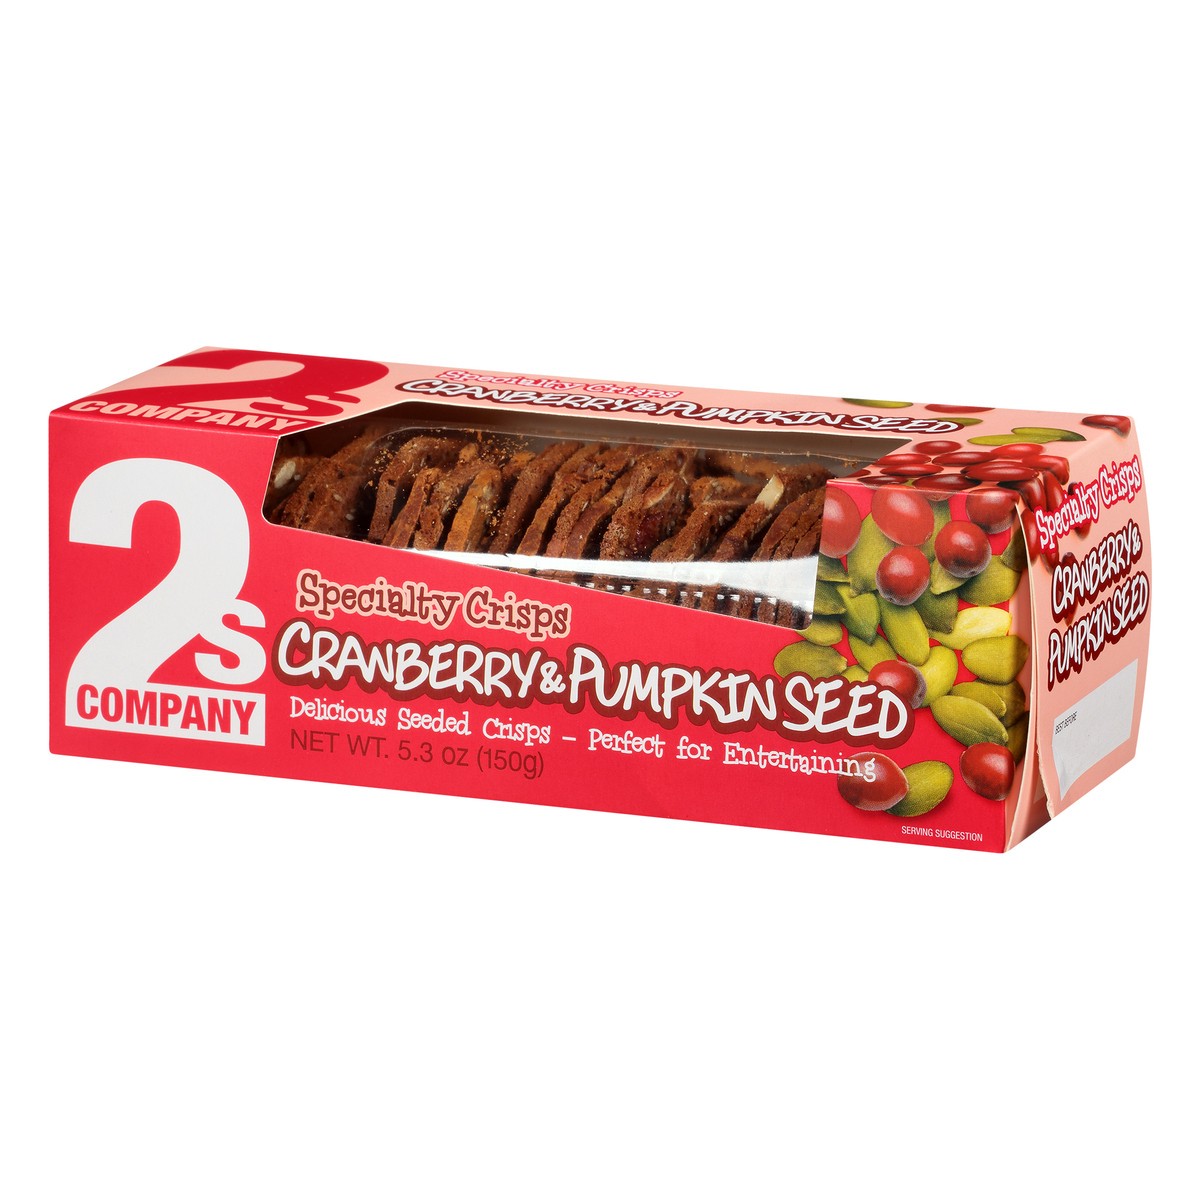 slide 5 of 13, 2S Company Cranberry/Pumpkin Cracker, 5.3 oz